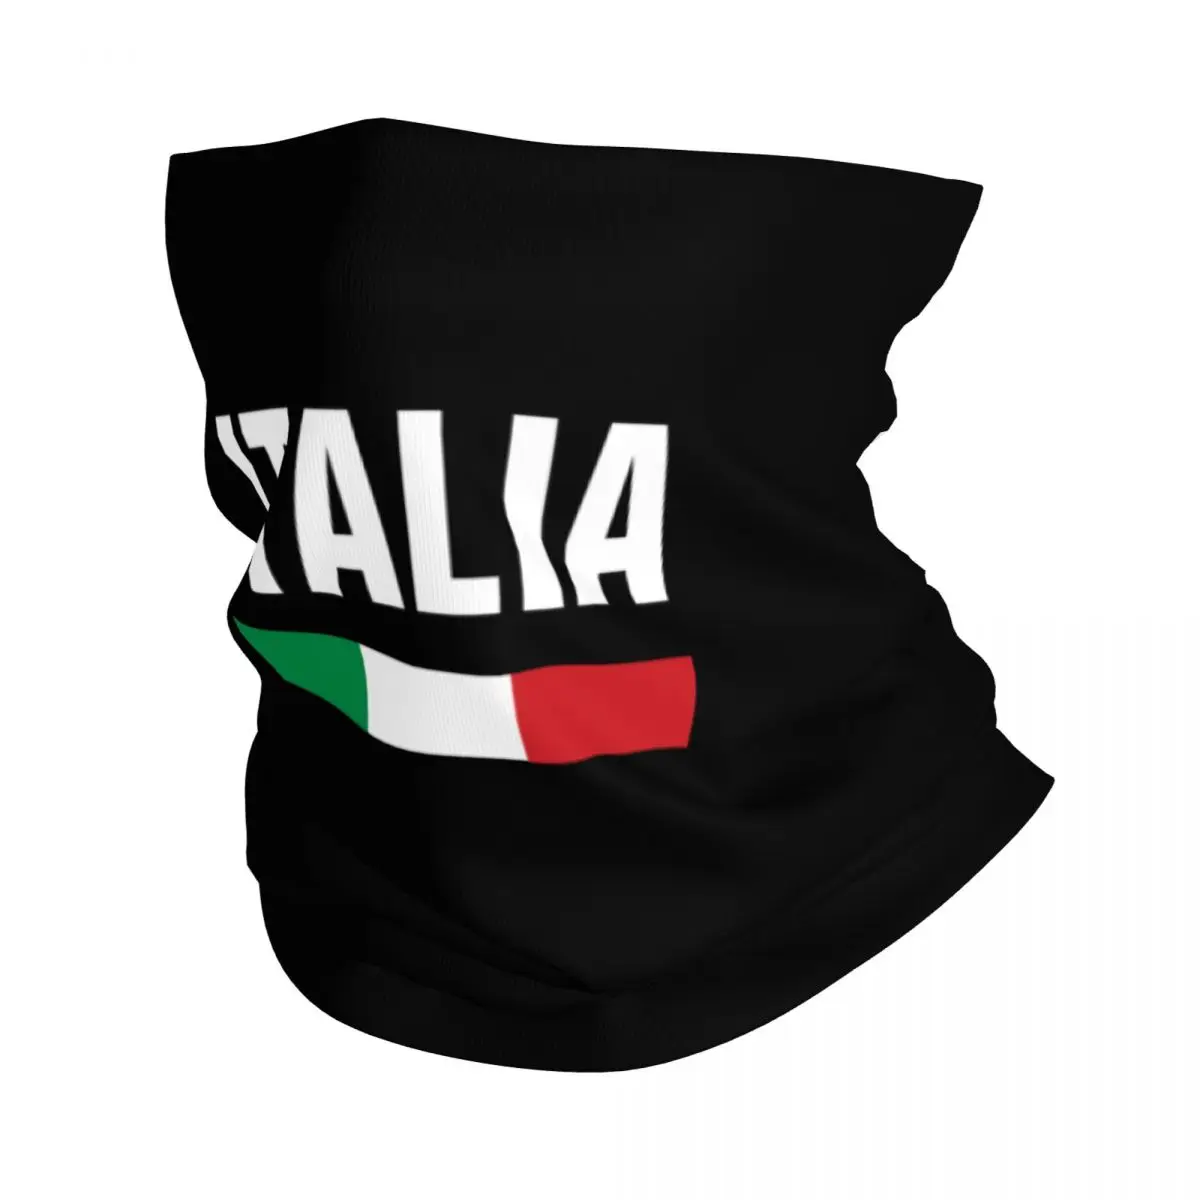 

Italia Italy Italian Flag Bandana Neck Cover Printed Wrap Scarf Warm Headwear Cycling Unisex Adult Breathable